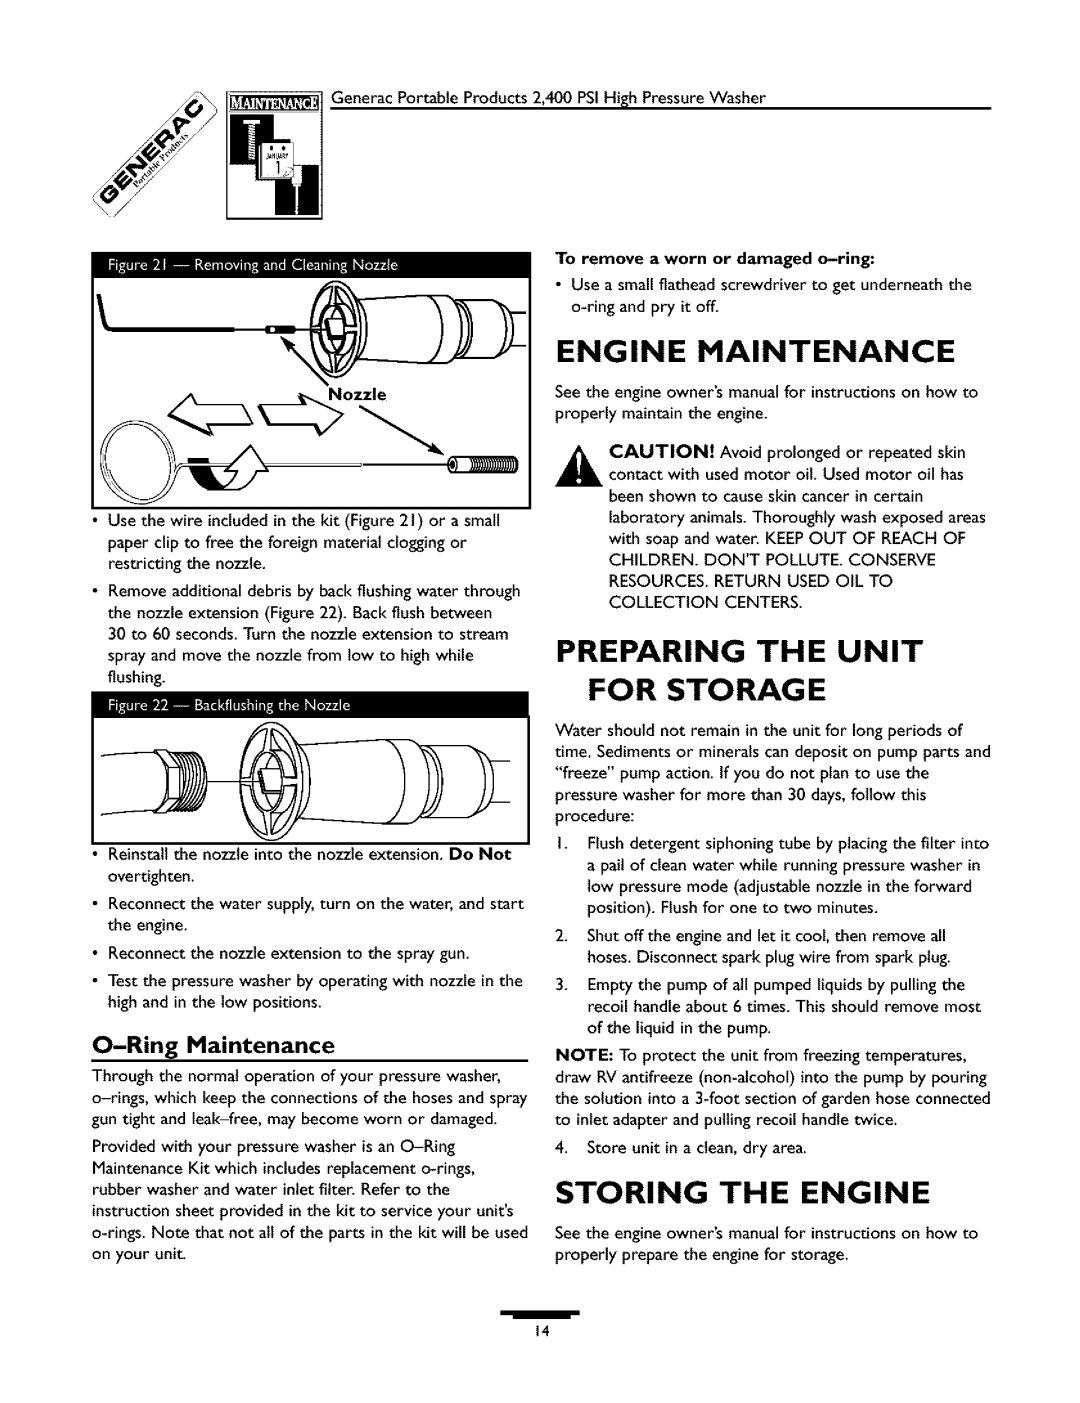 Generac 1537-0 owner manual Engine Maintenance, Preparing The Unit, For Storage, Storing The Engine, O-Ring Maintenance 